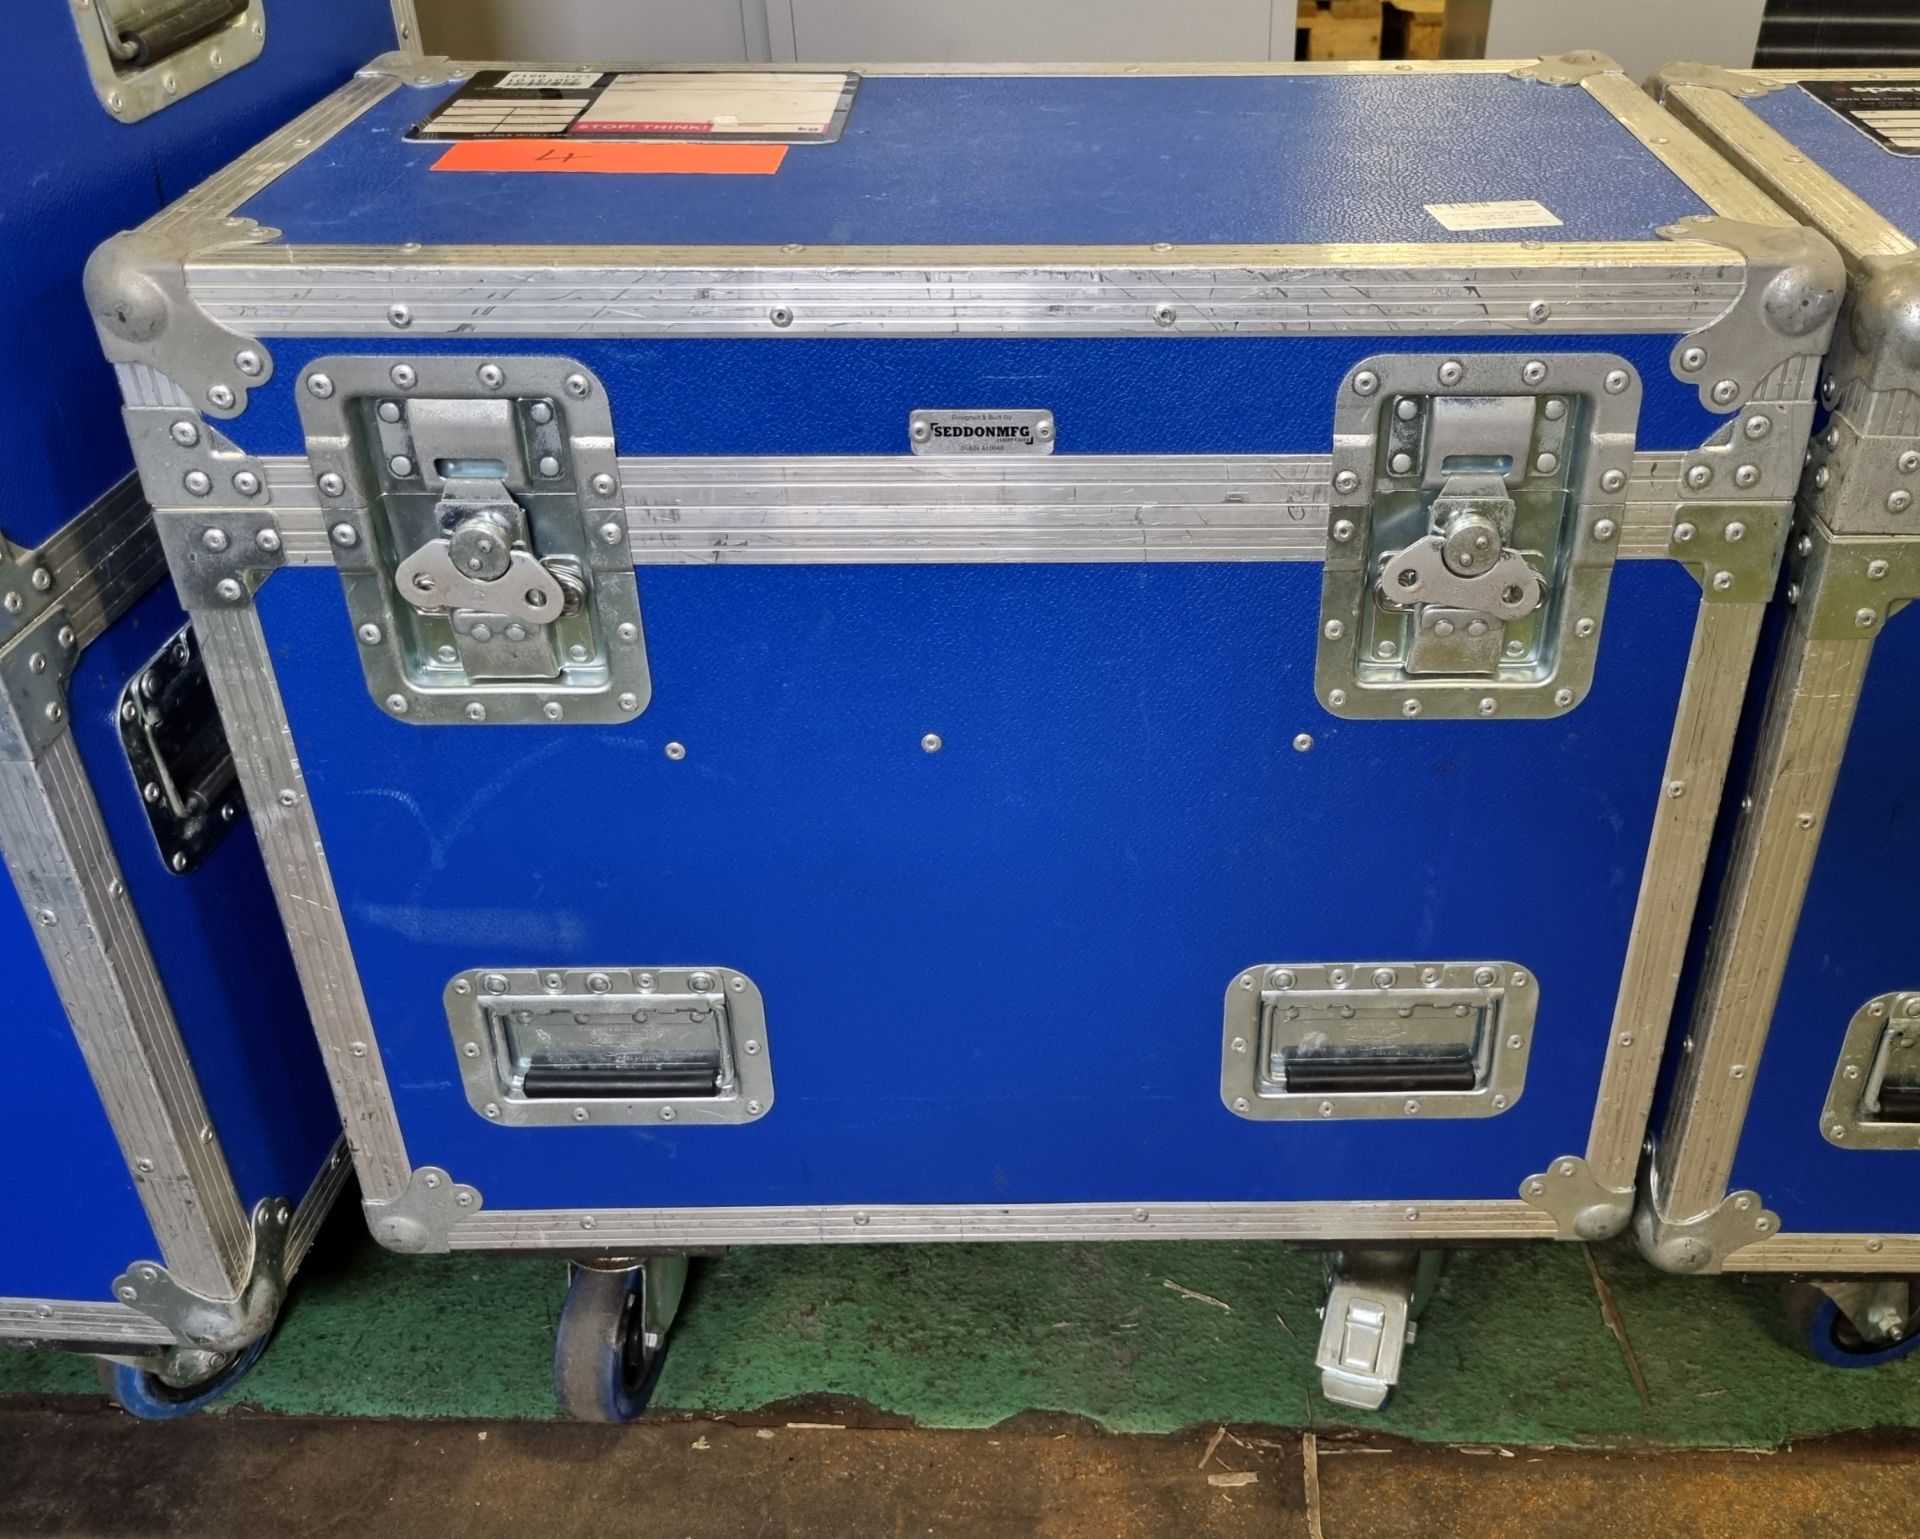 Chauvet Colordash par quad 18 lights (set of 3) in blue flight case